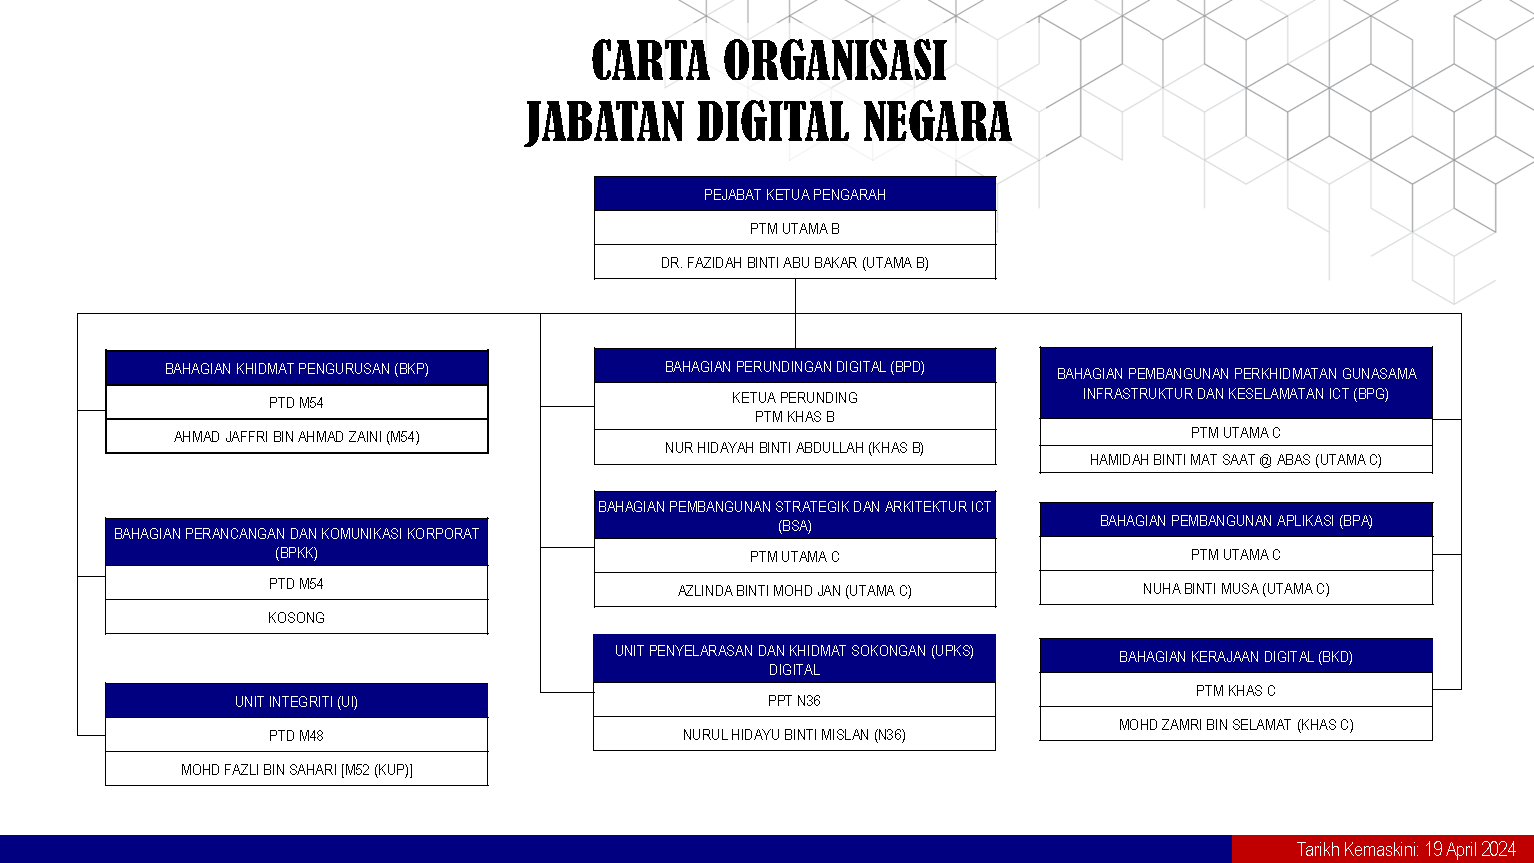 Carta Organisasi JDN